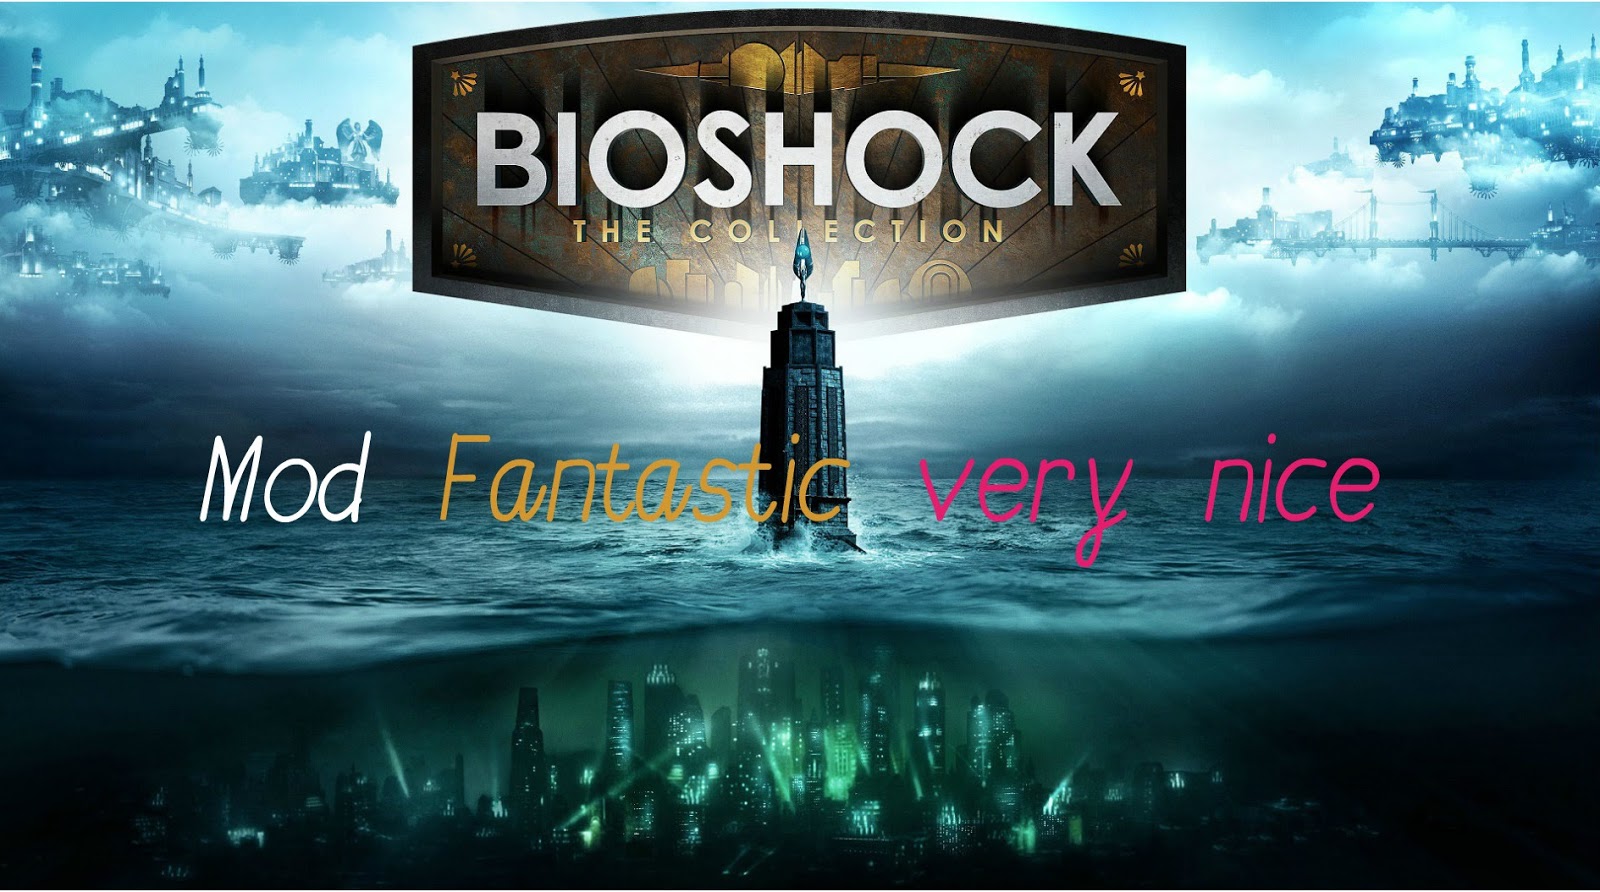 bioshock 2 remastered directx 9.0c